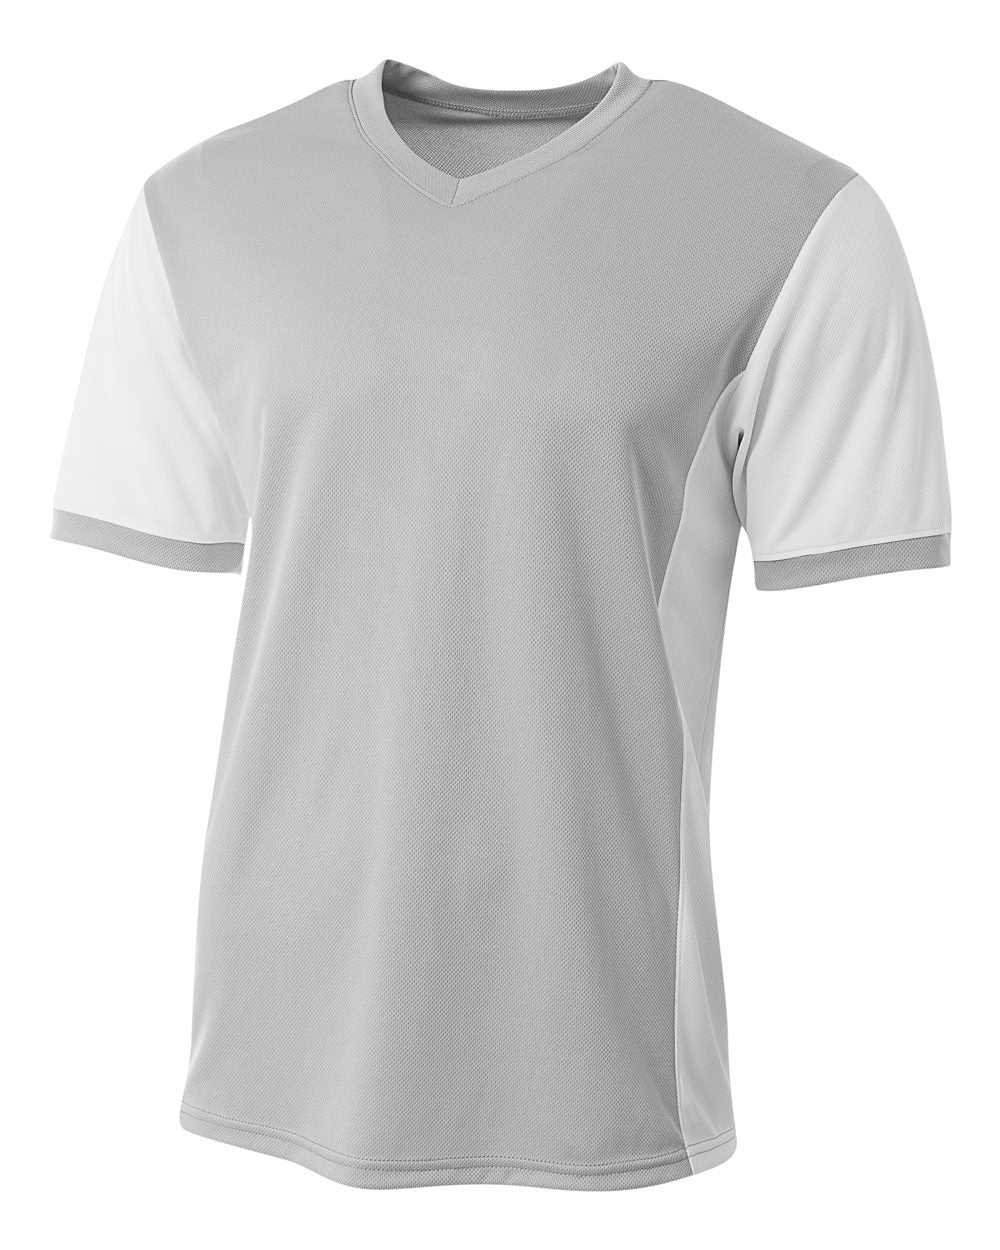 A4 N3017 Premier Soccer Jersey - Silver White - HIT a Double